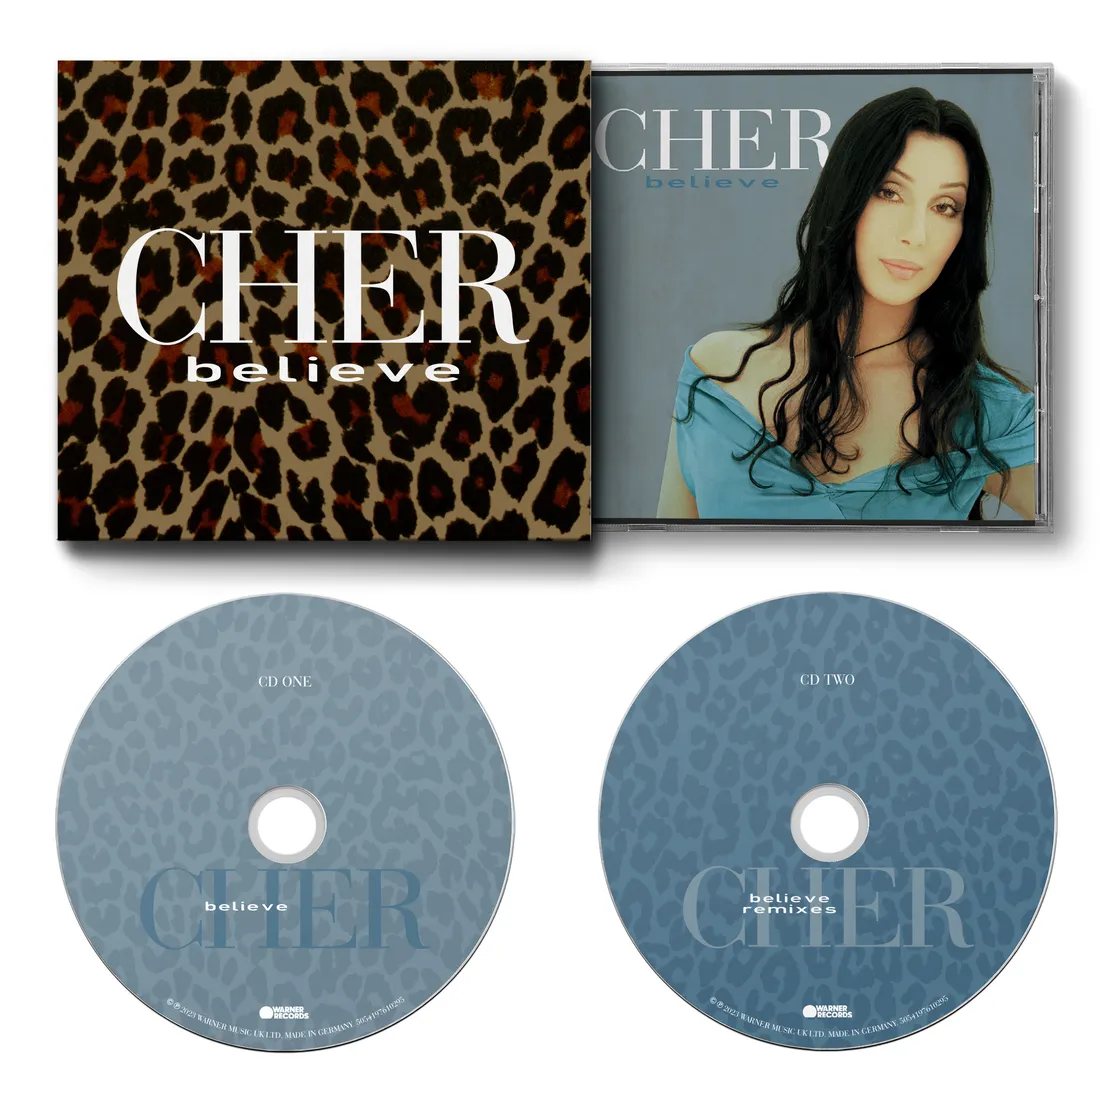 "Believe" Cher